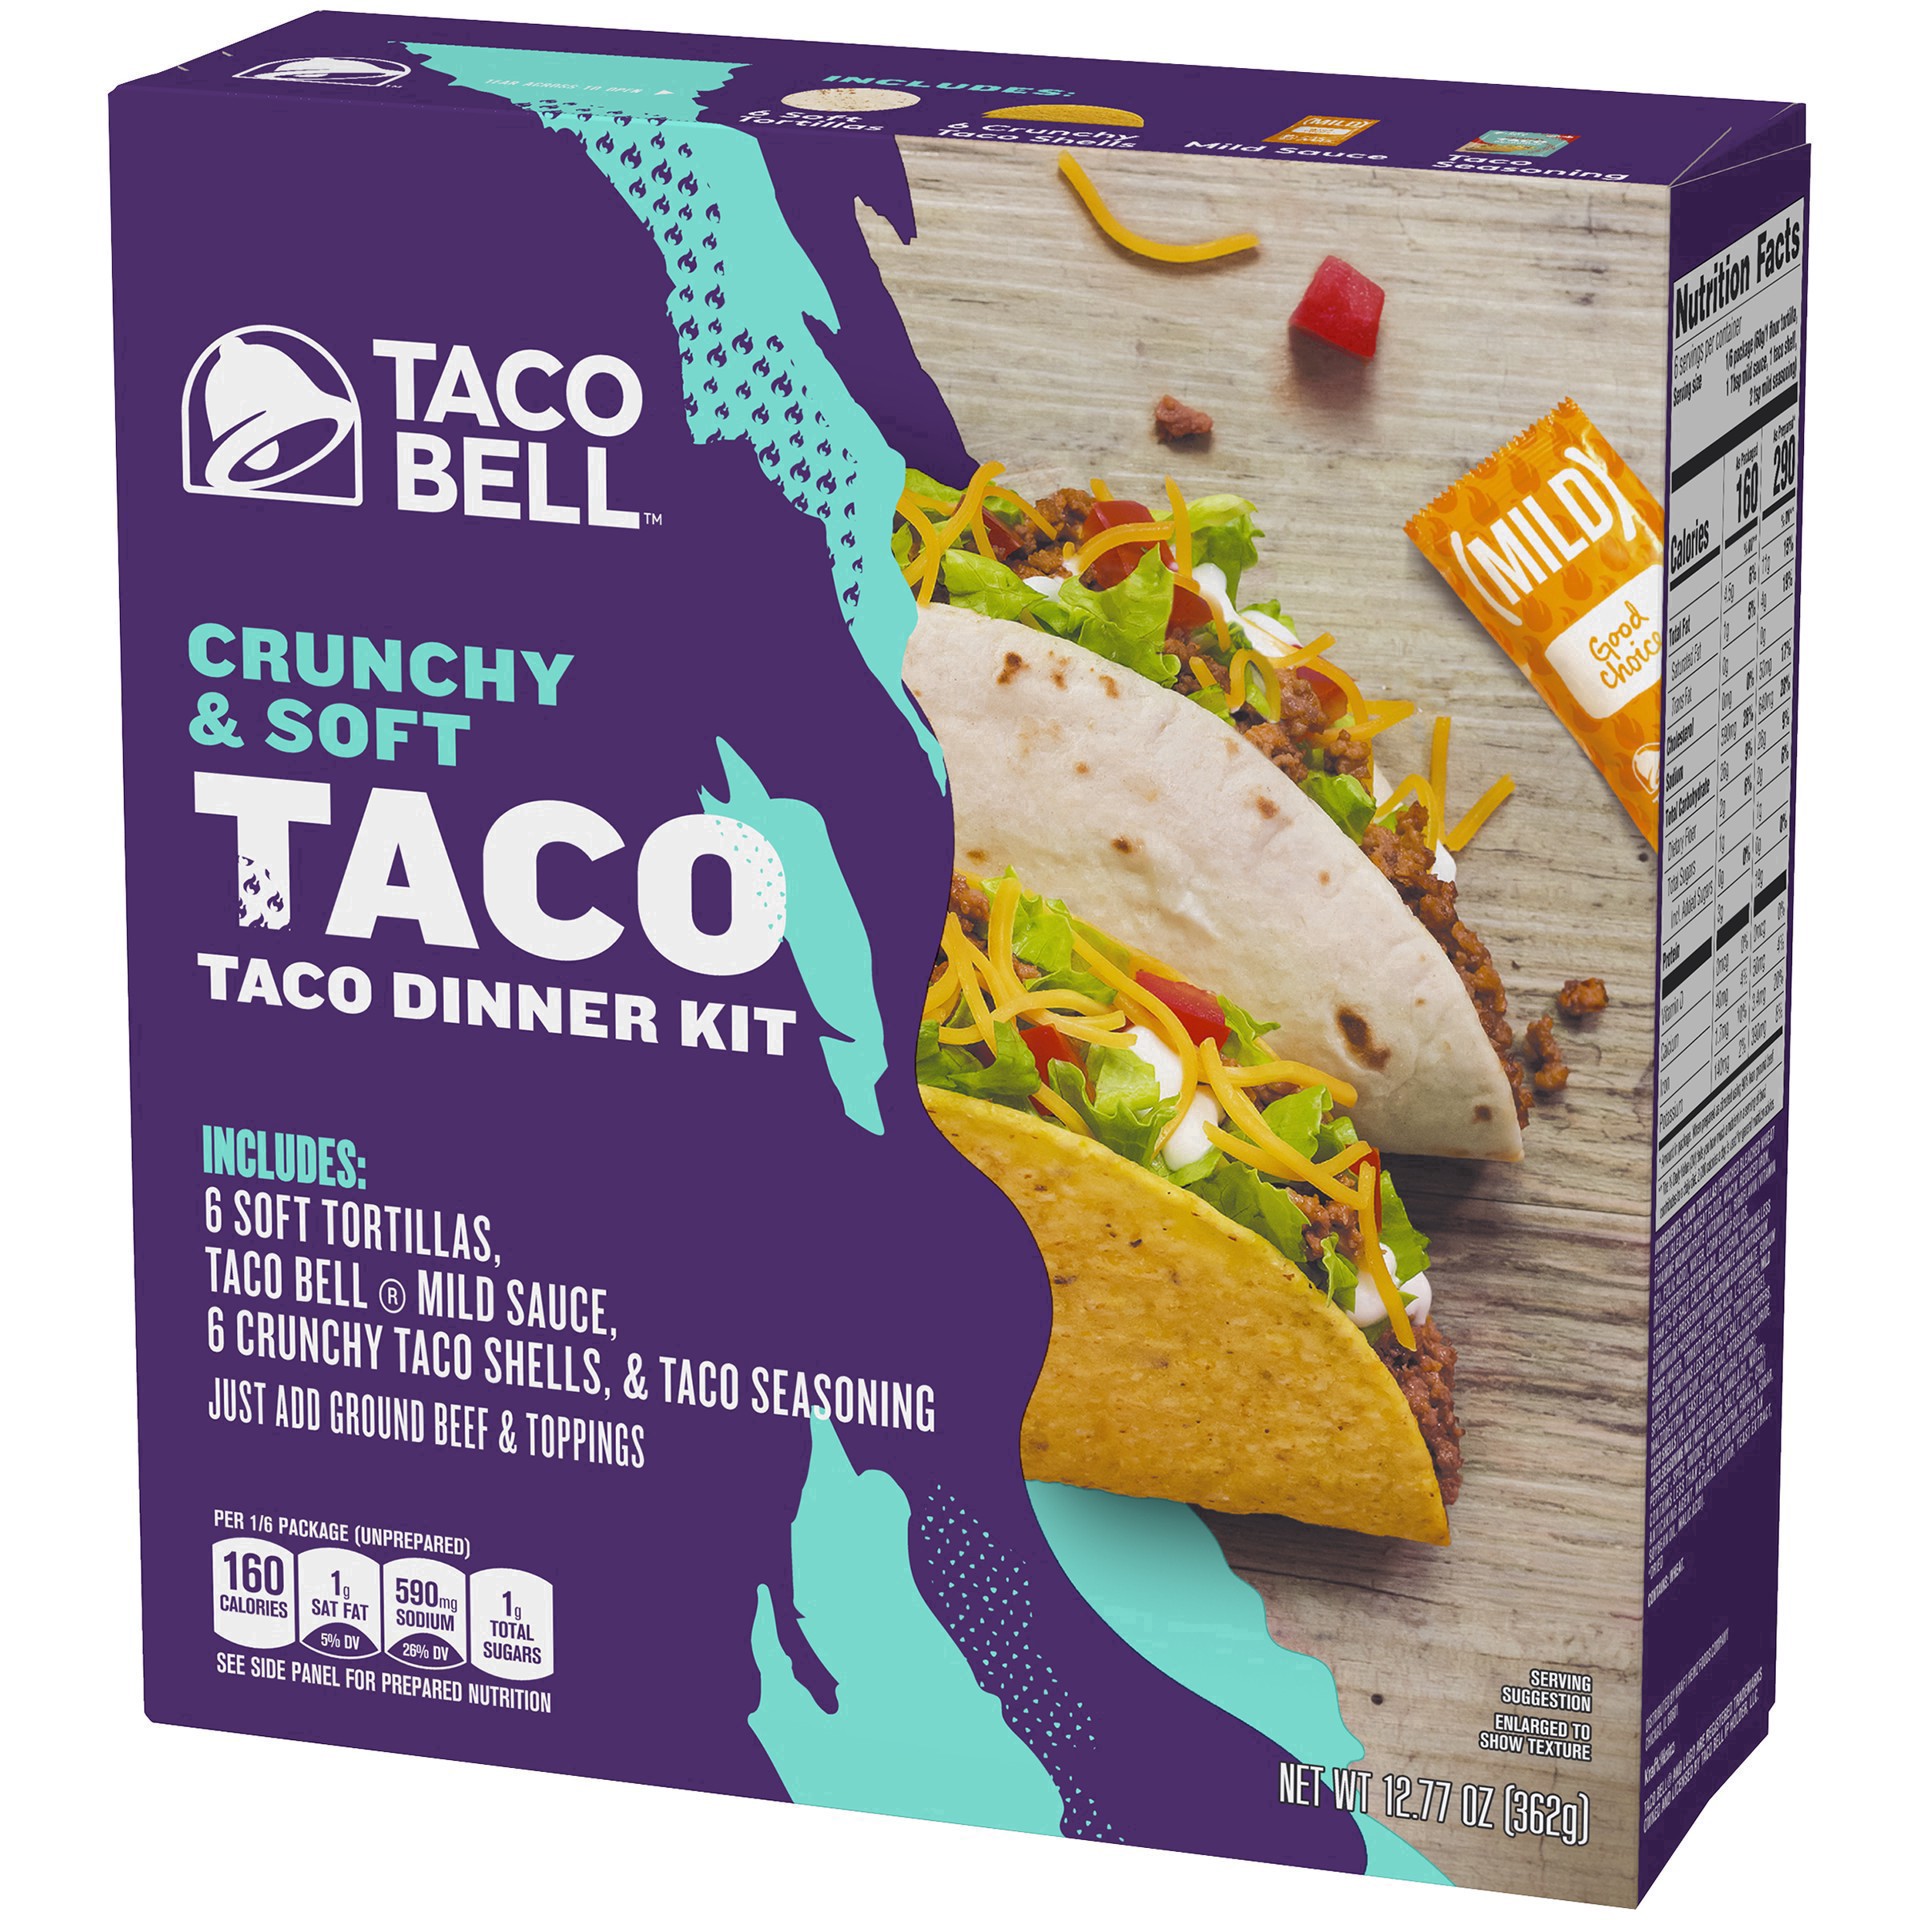 slide 34 of 101, Taco Bell Crunchy & Soft Taco Cravings Kit with 6 Soft Tortillas, 6 Crunchy Taco Shells, Taco Bell Mild Sauce & Seasoning, 12.77 oz Box, 1 ct